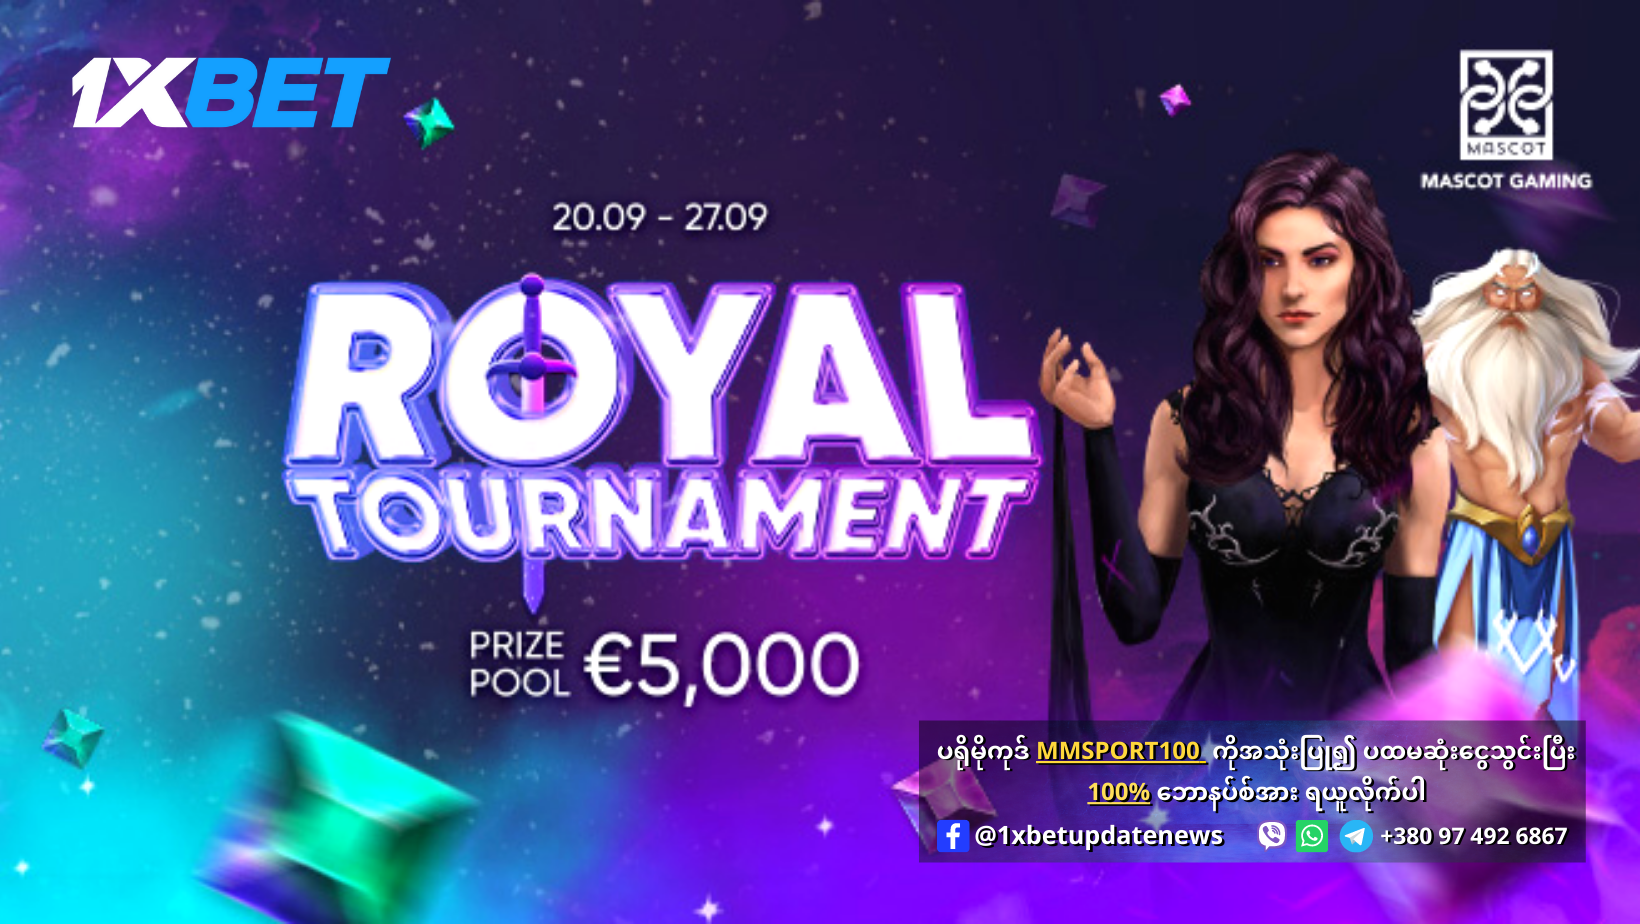 Royal Tournament Offer